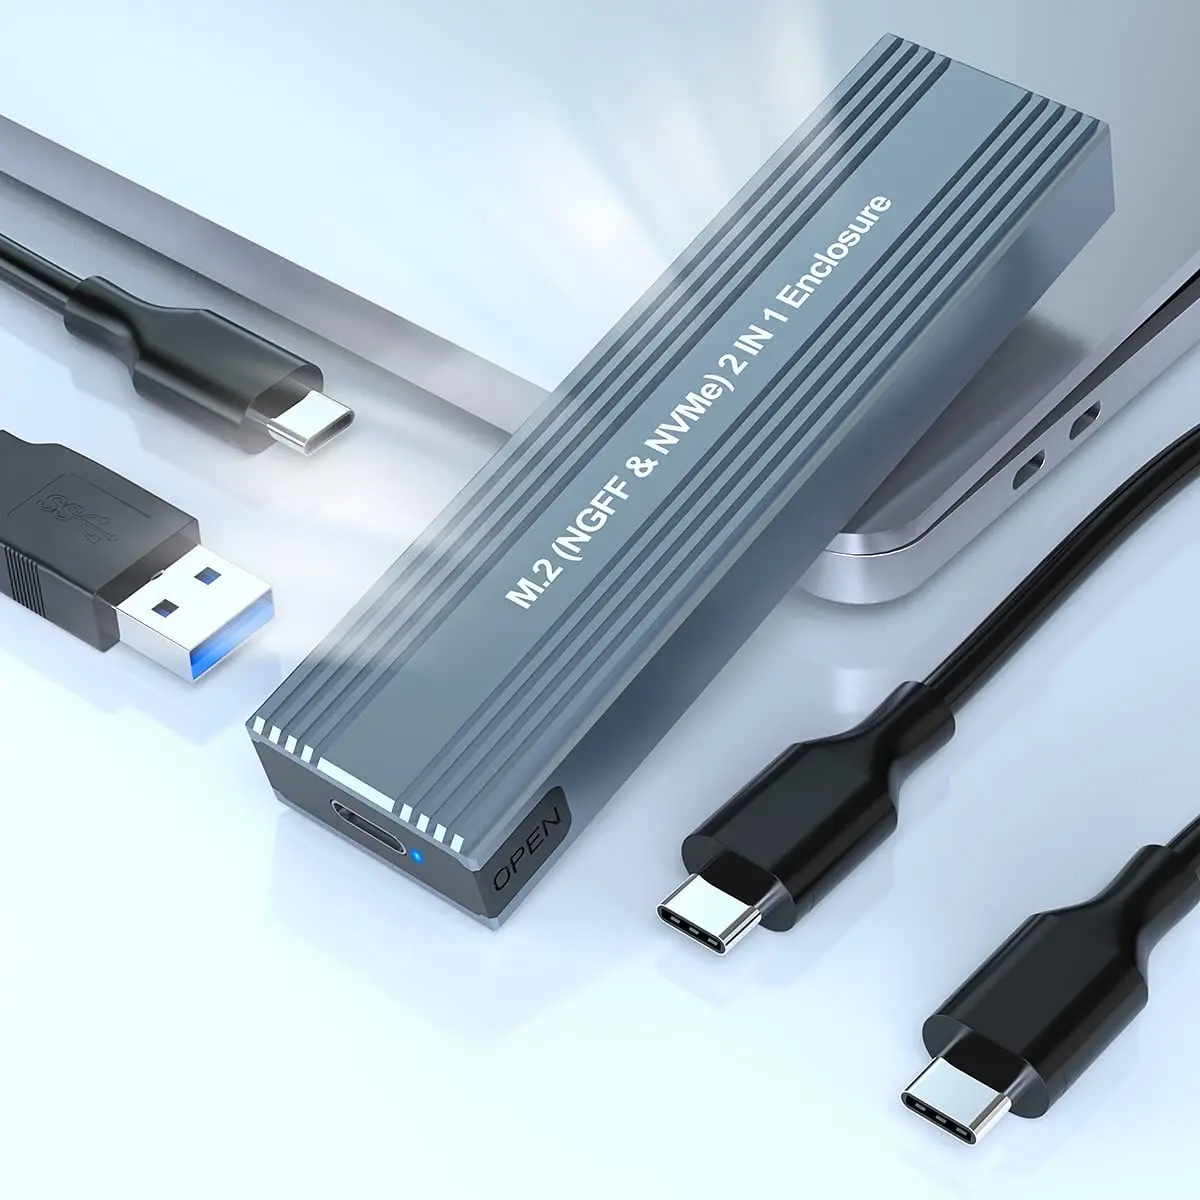 Dual Protocol M2 SSD NVMe Case Enclosure, M.2 to USB 3.1 Gen 2 SSD Adapter  for NVME NGFF SATA M+B Key 2230/2242/2260/2280 SSD